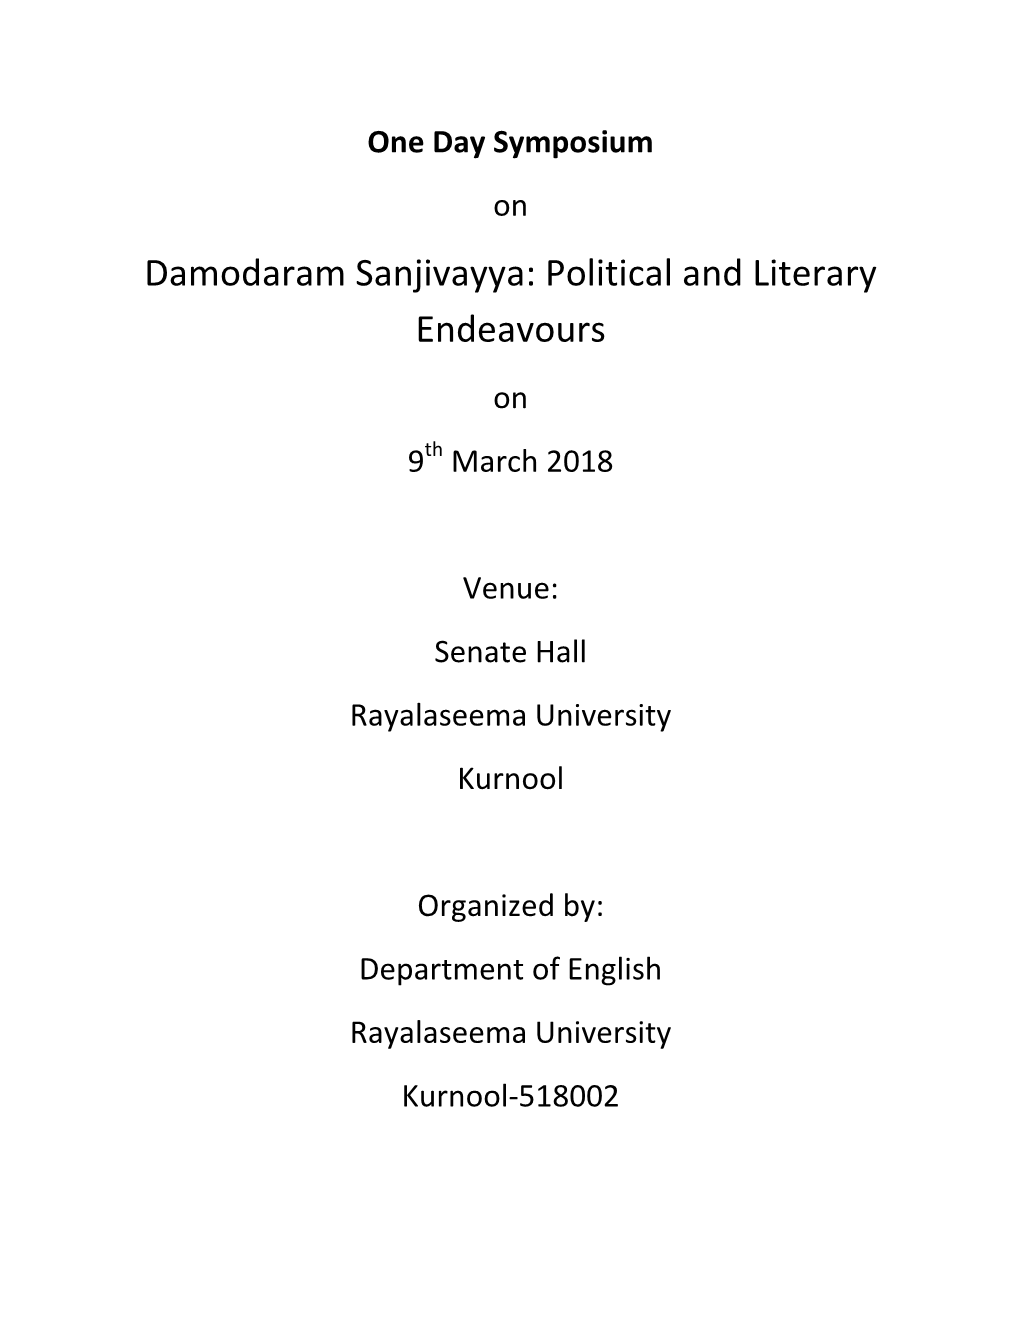 Damodaram Sanjivayya: Political and Literary Endeavours on 9Th March 2018